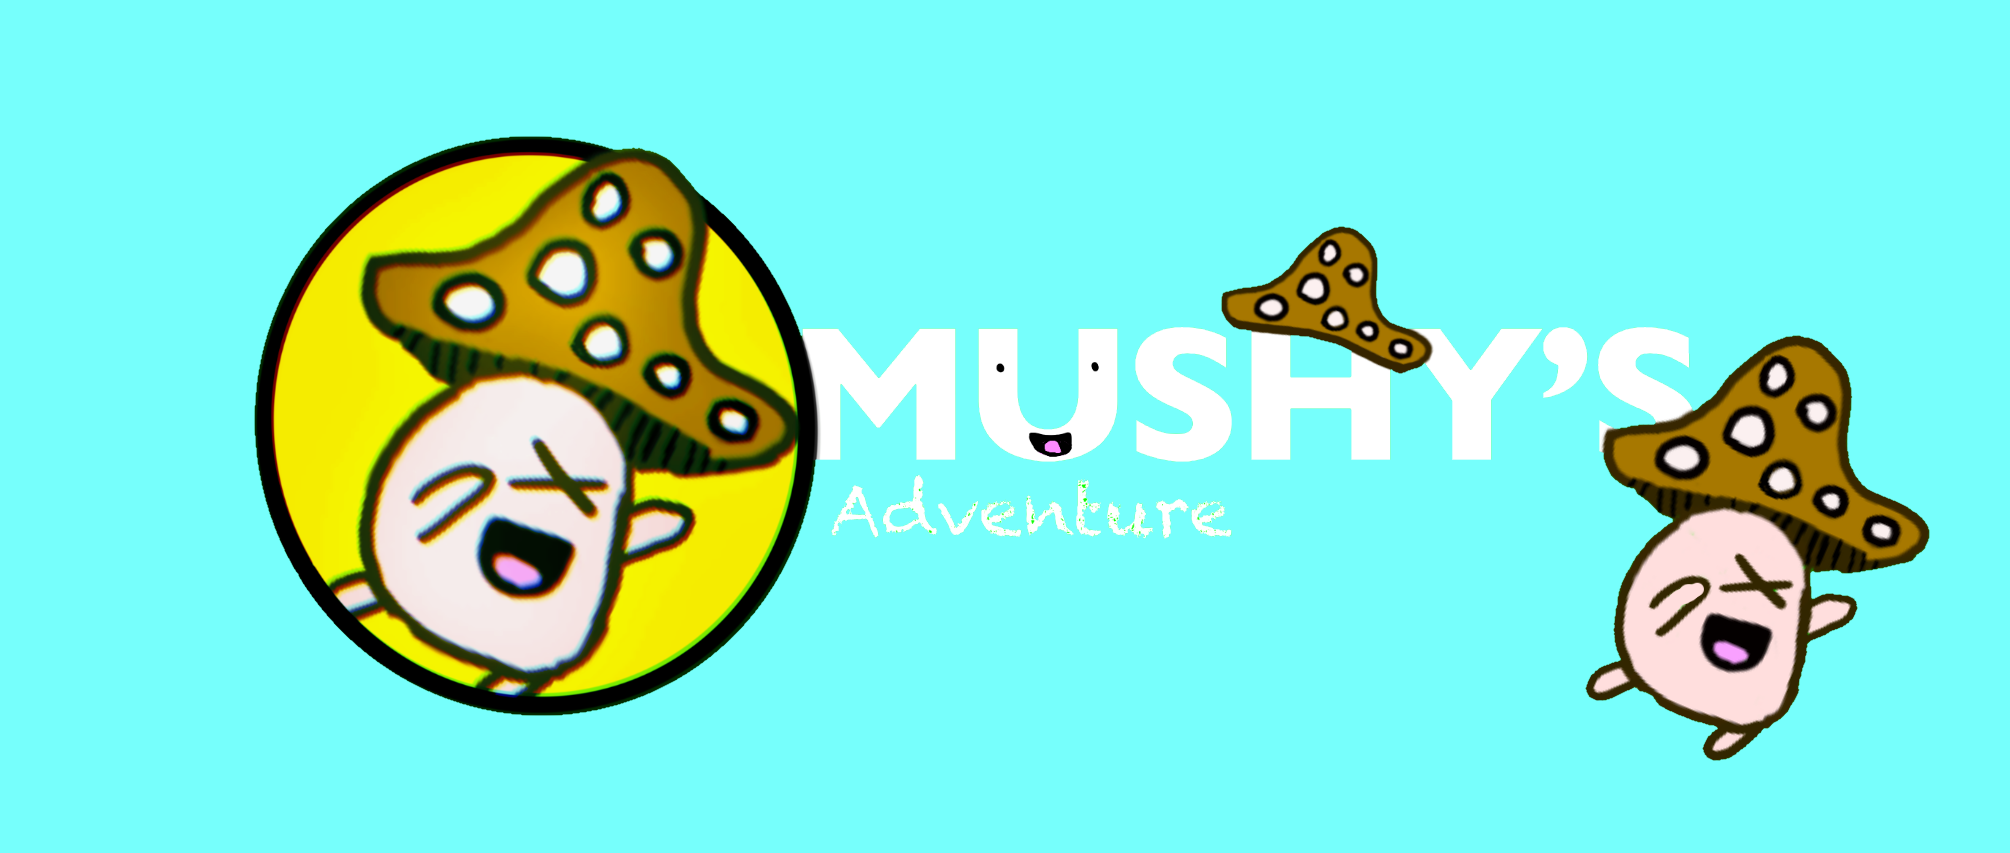 Mushy's Adventure